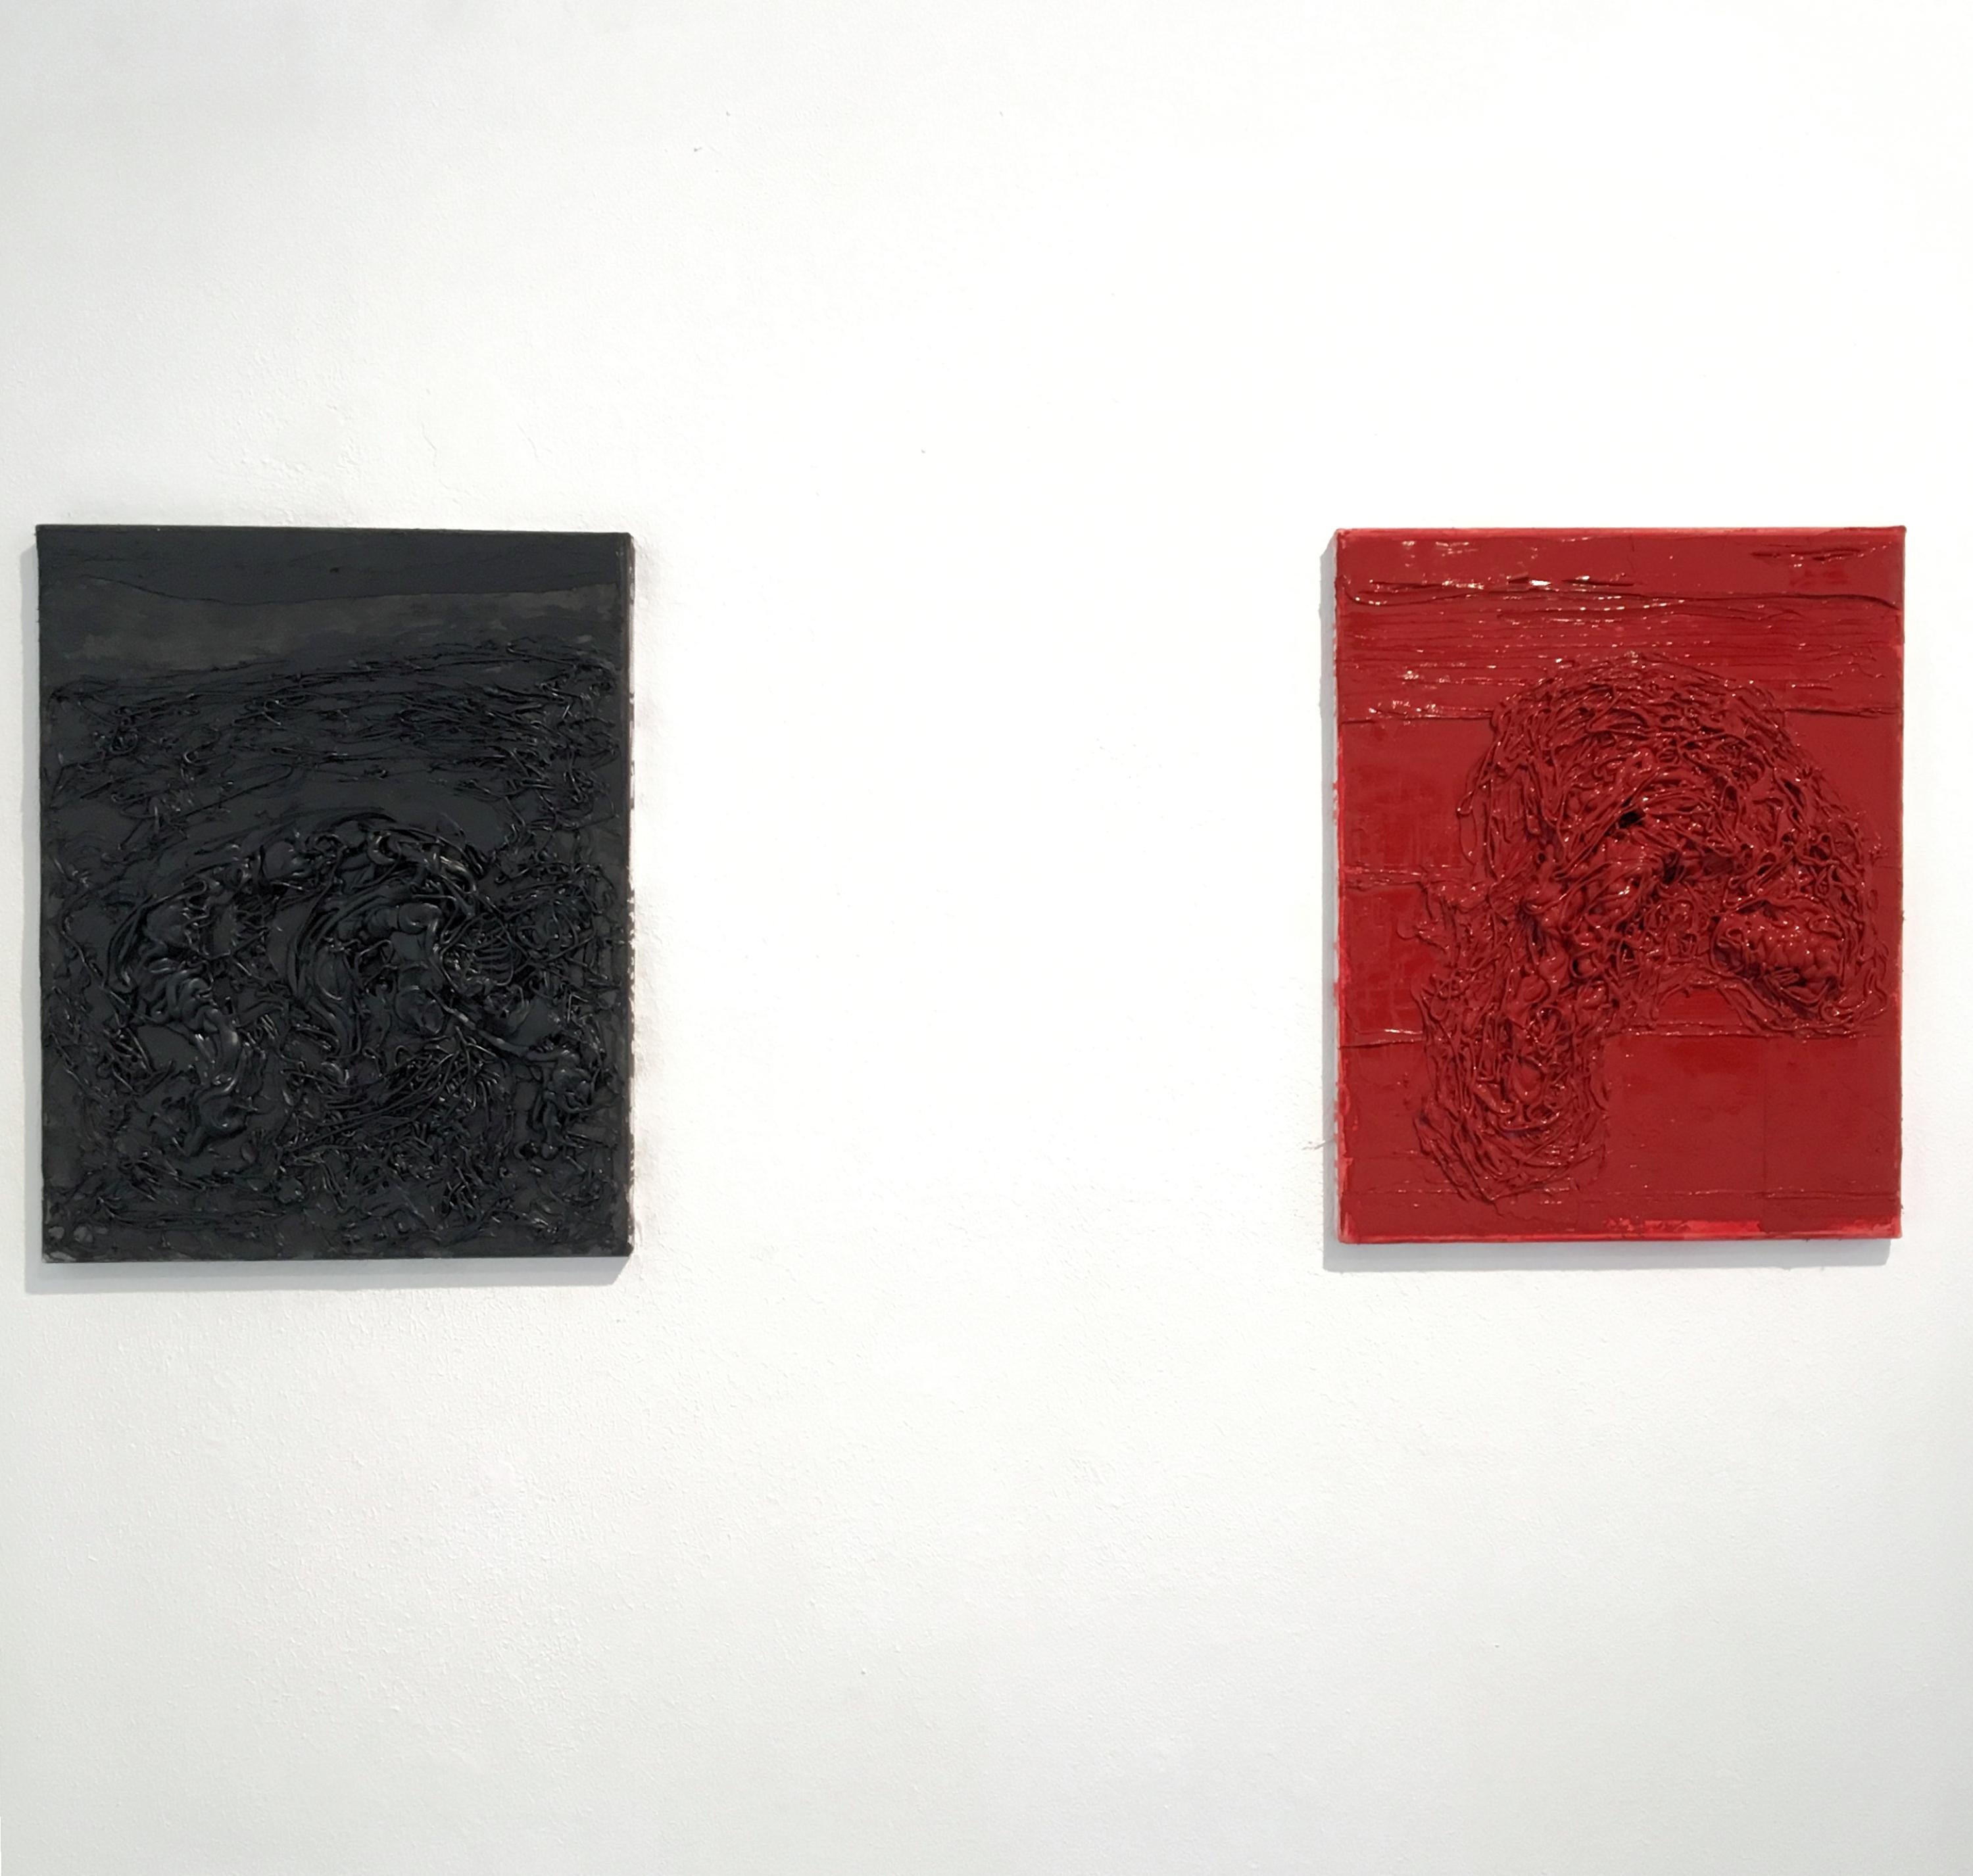 Untitled 02 - 21st Century, Organic, Black, Minimalist, Abstract, Monochrome - Painting de Zsolt Berszán